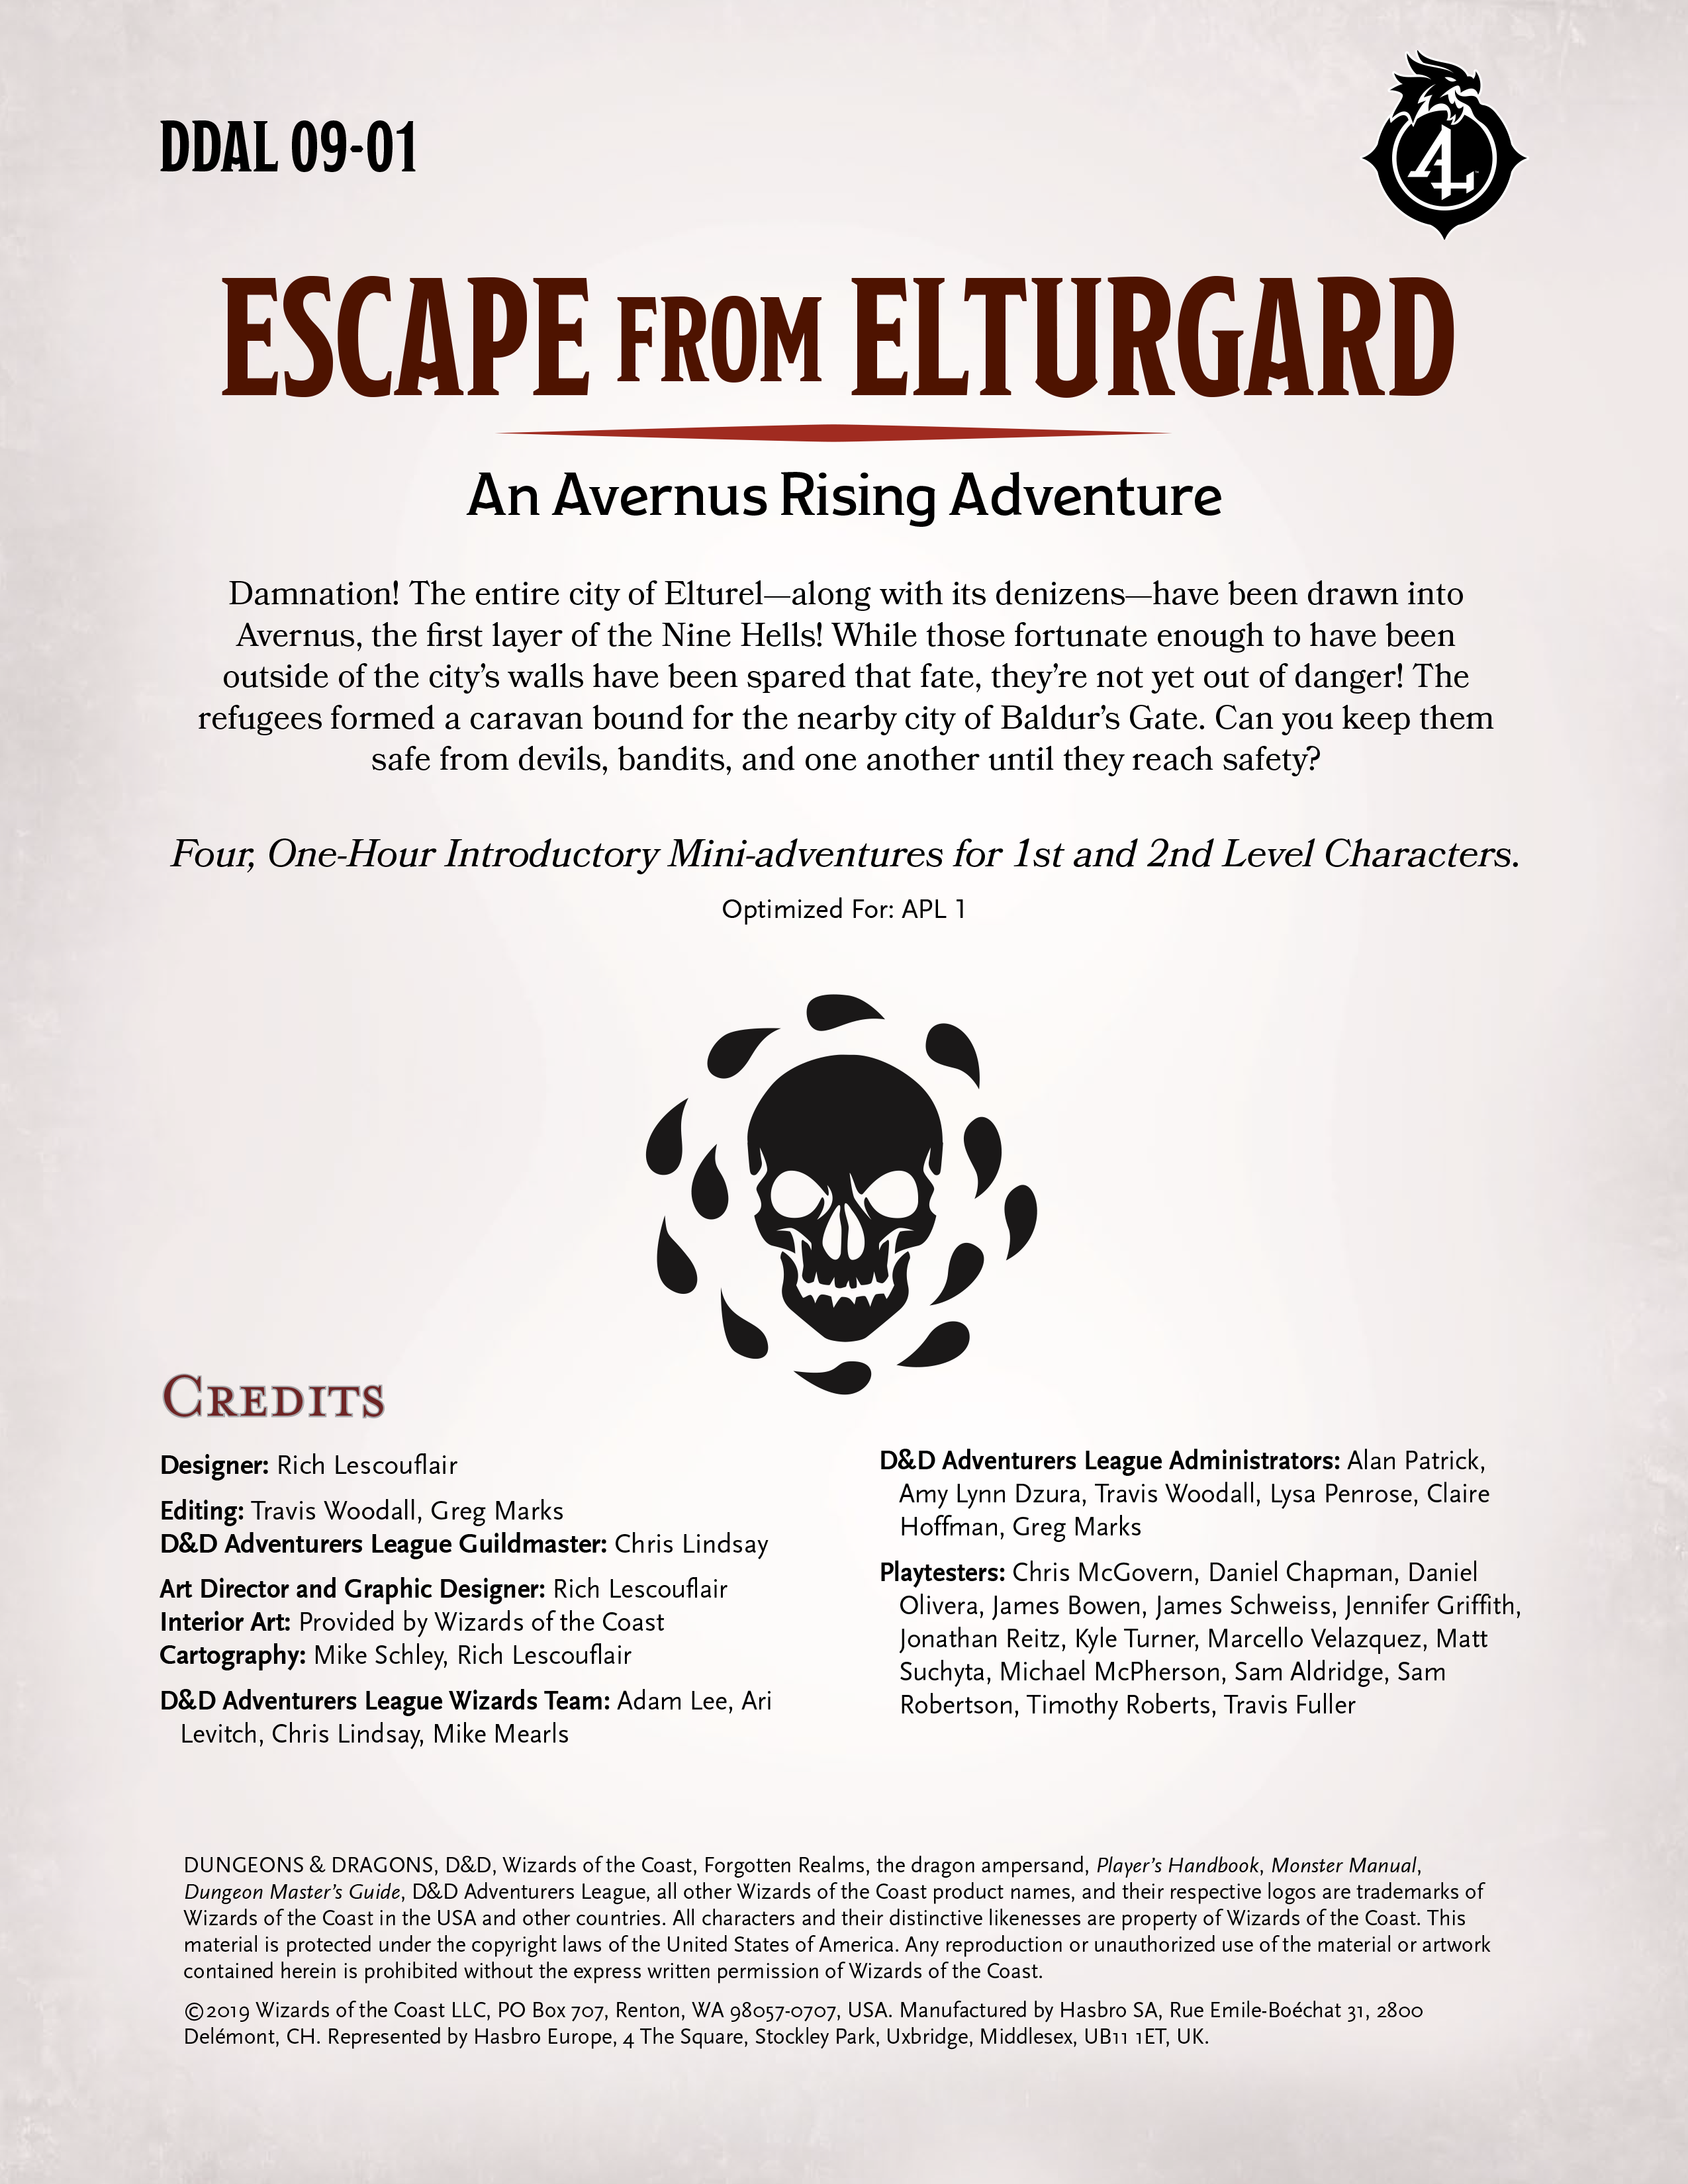 Escape From Elturgard